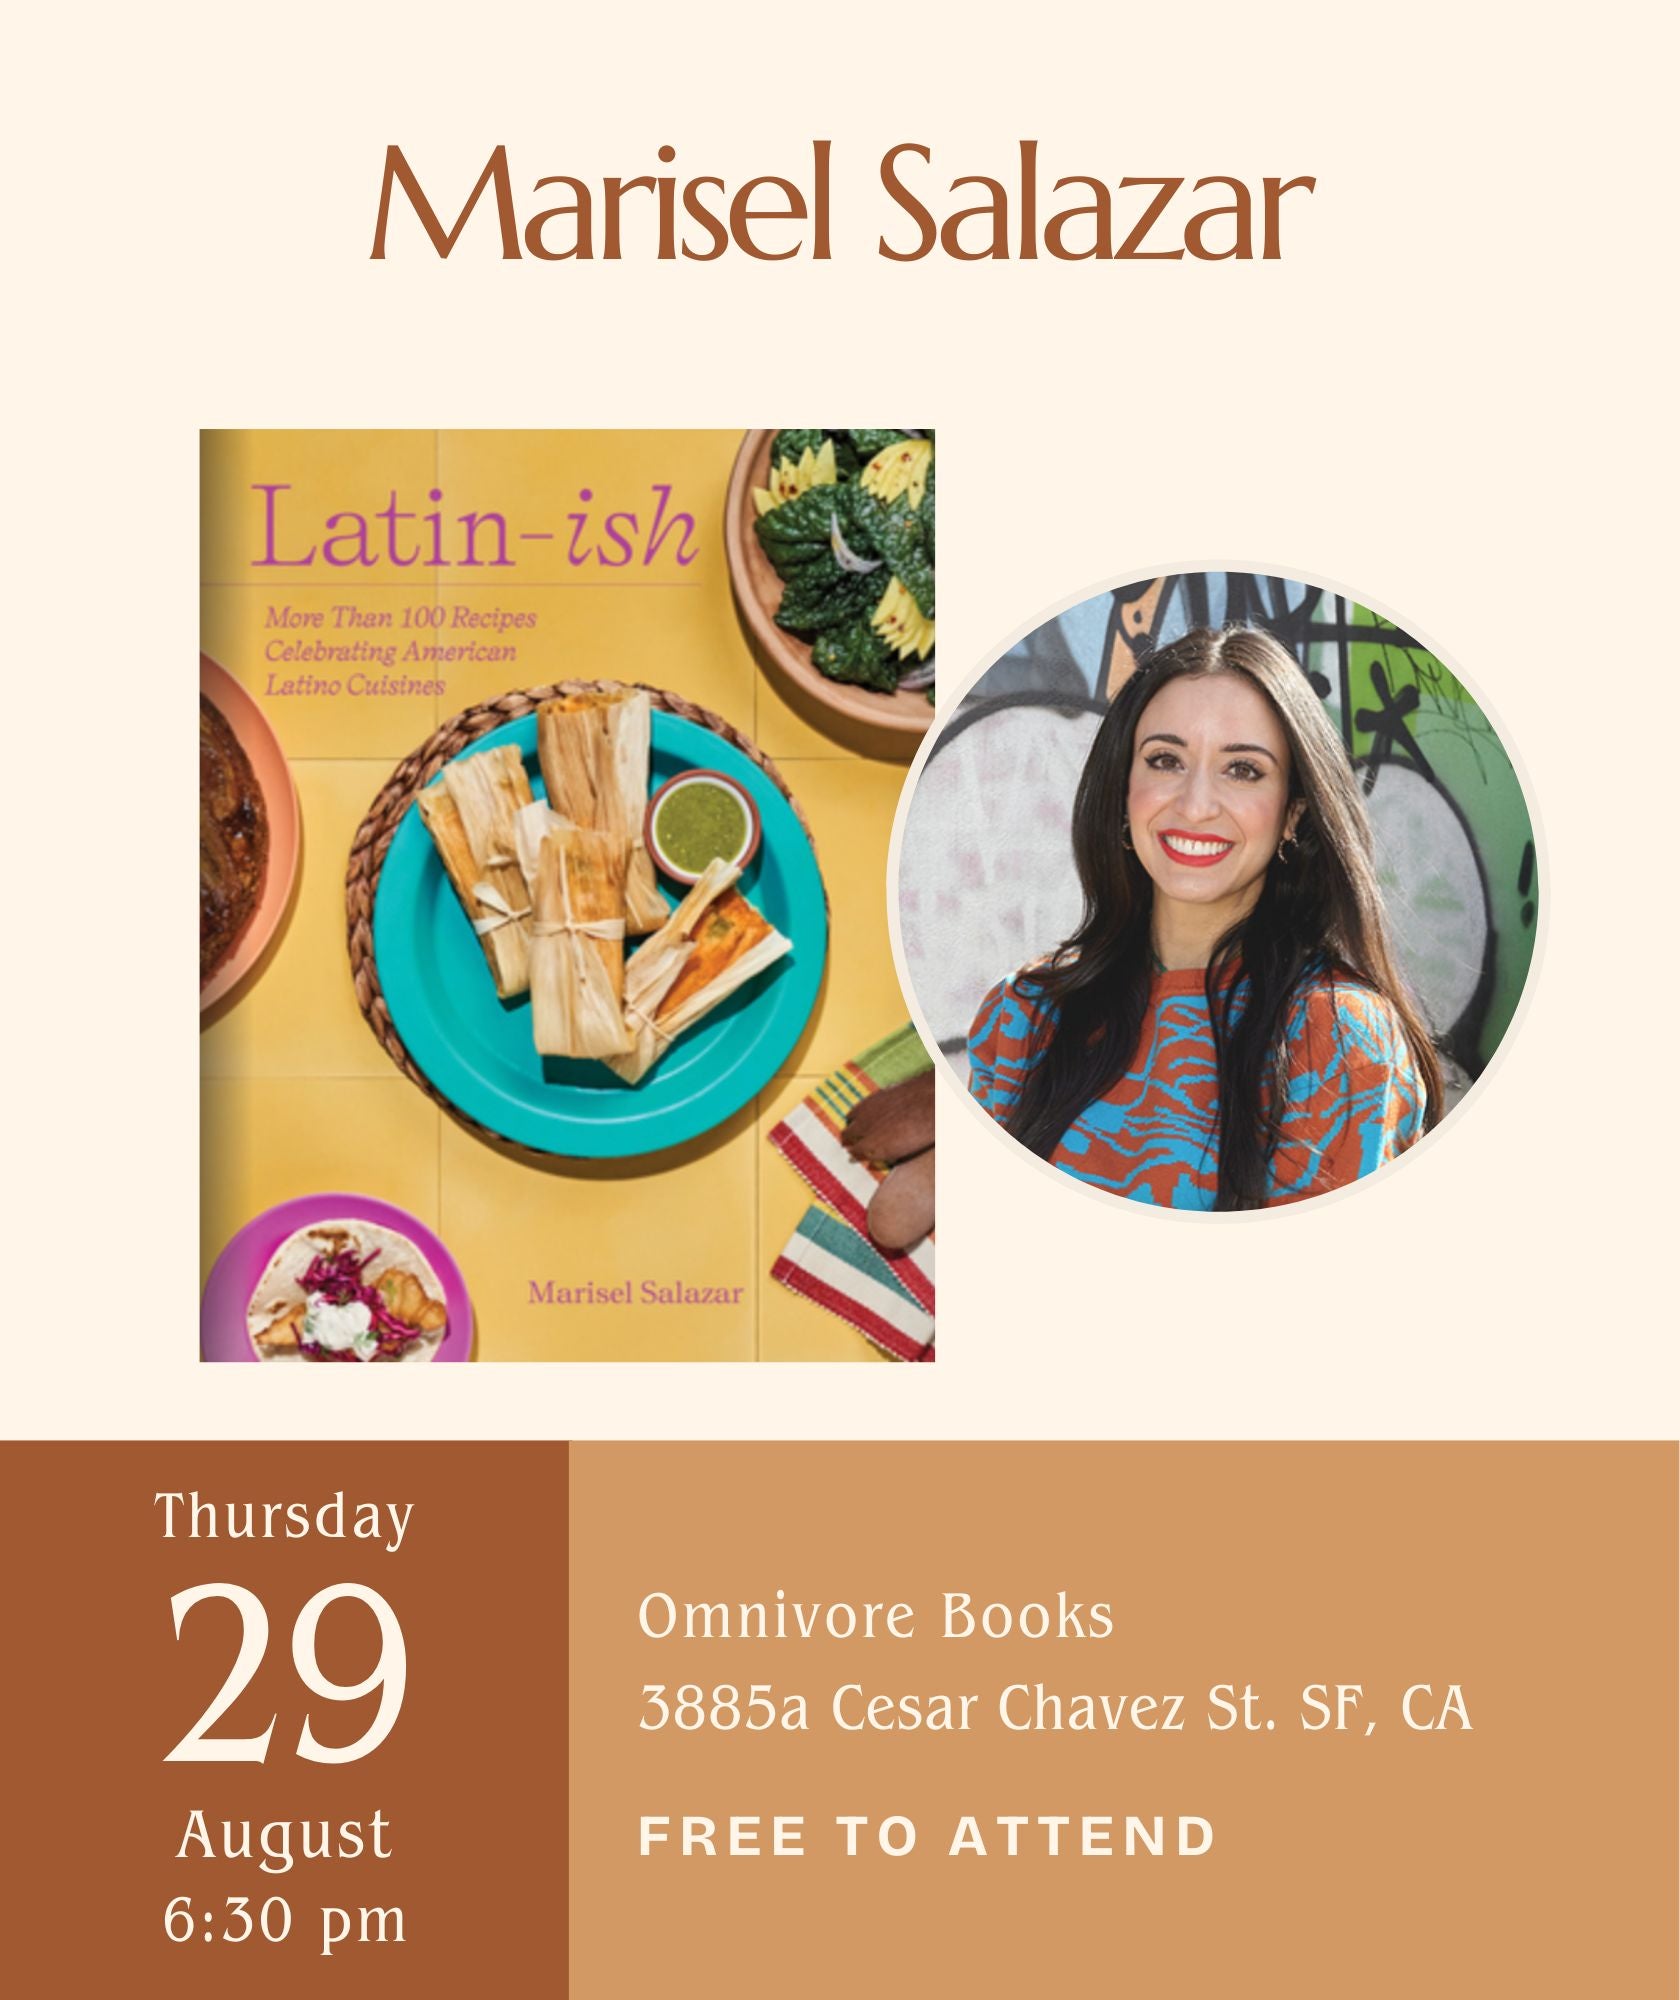 Marisel Salazar Author Talk • Latin-Ish: More Than 100 Recipes Celebrating American Latino Cuisines